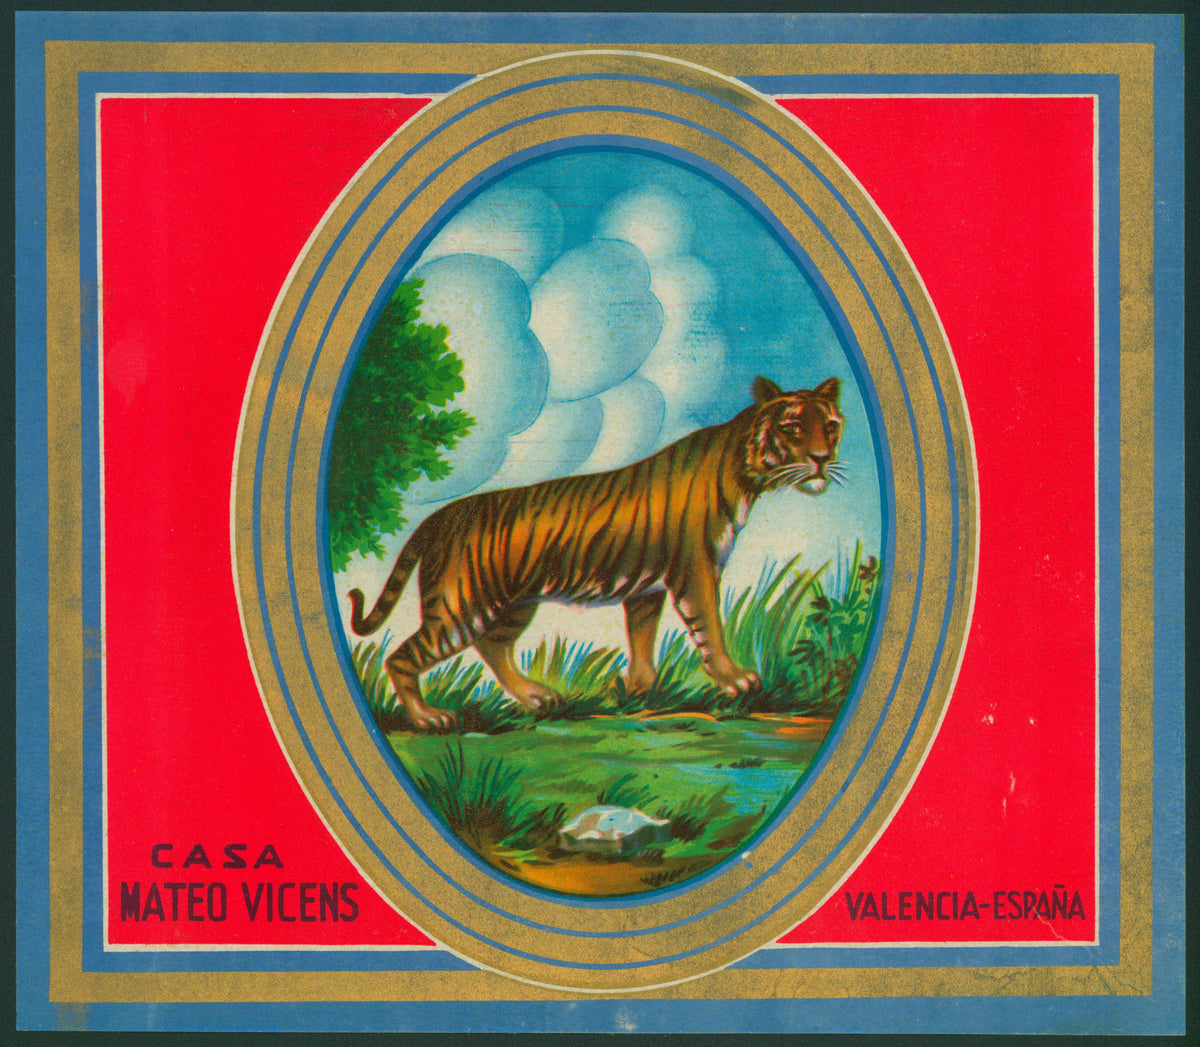 Roaring Tiger- Spanish Crate Label - Authentic Vintage Antique Print